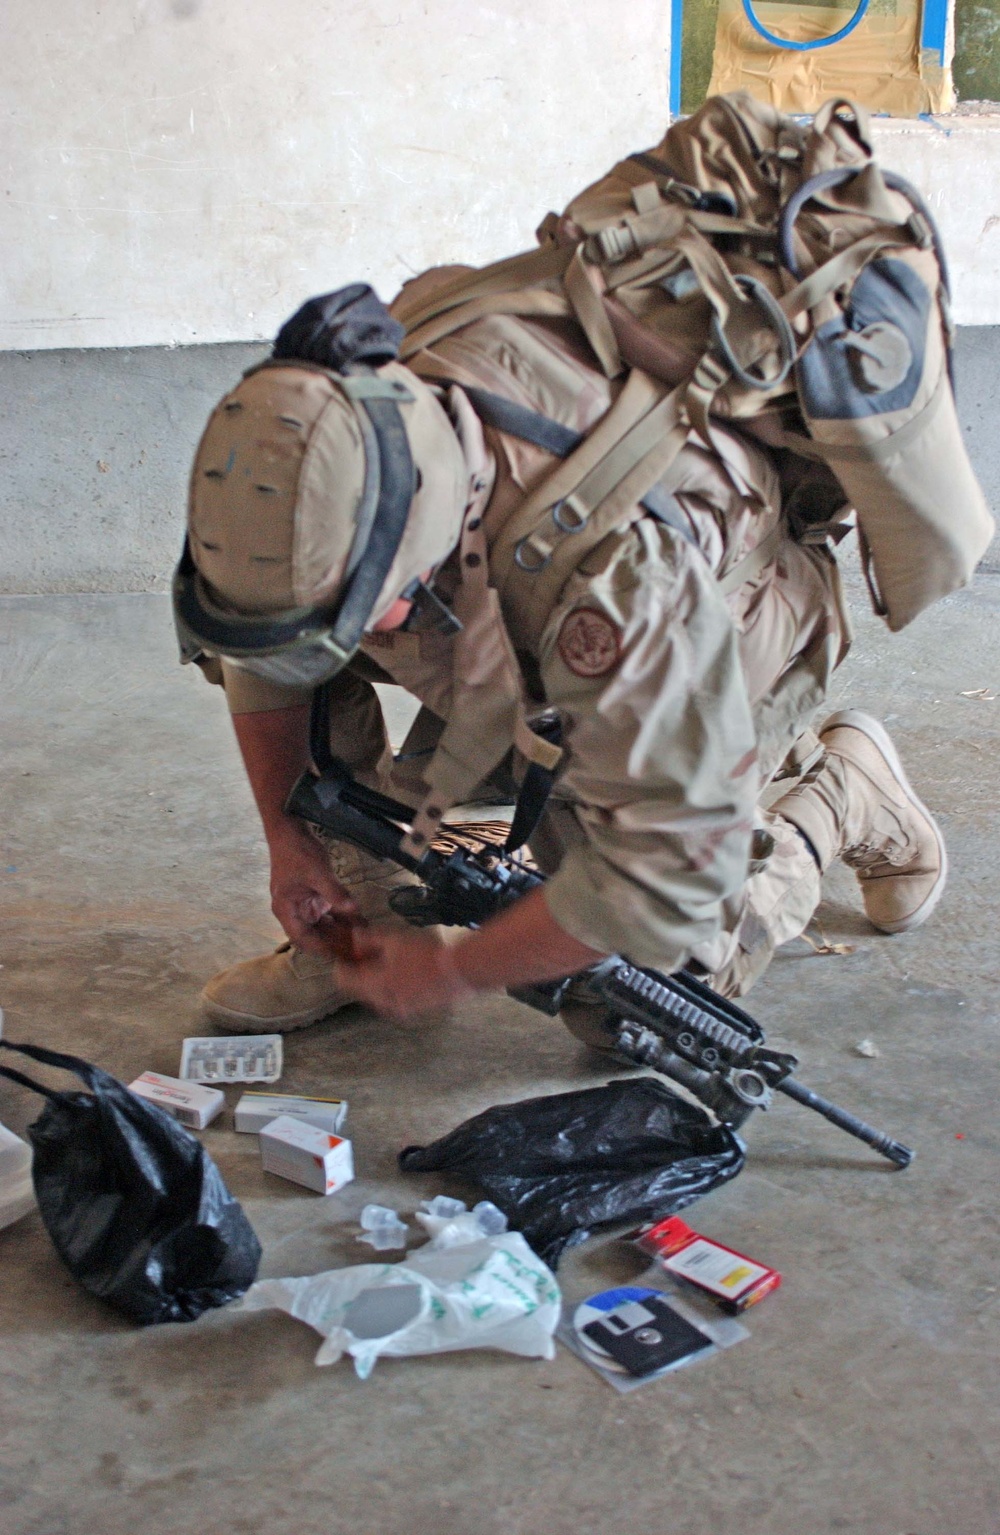 A Soldier searches through medical supplies